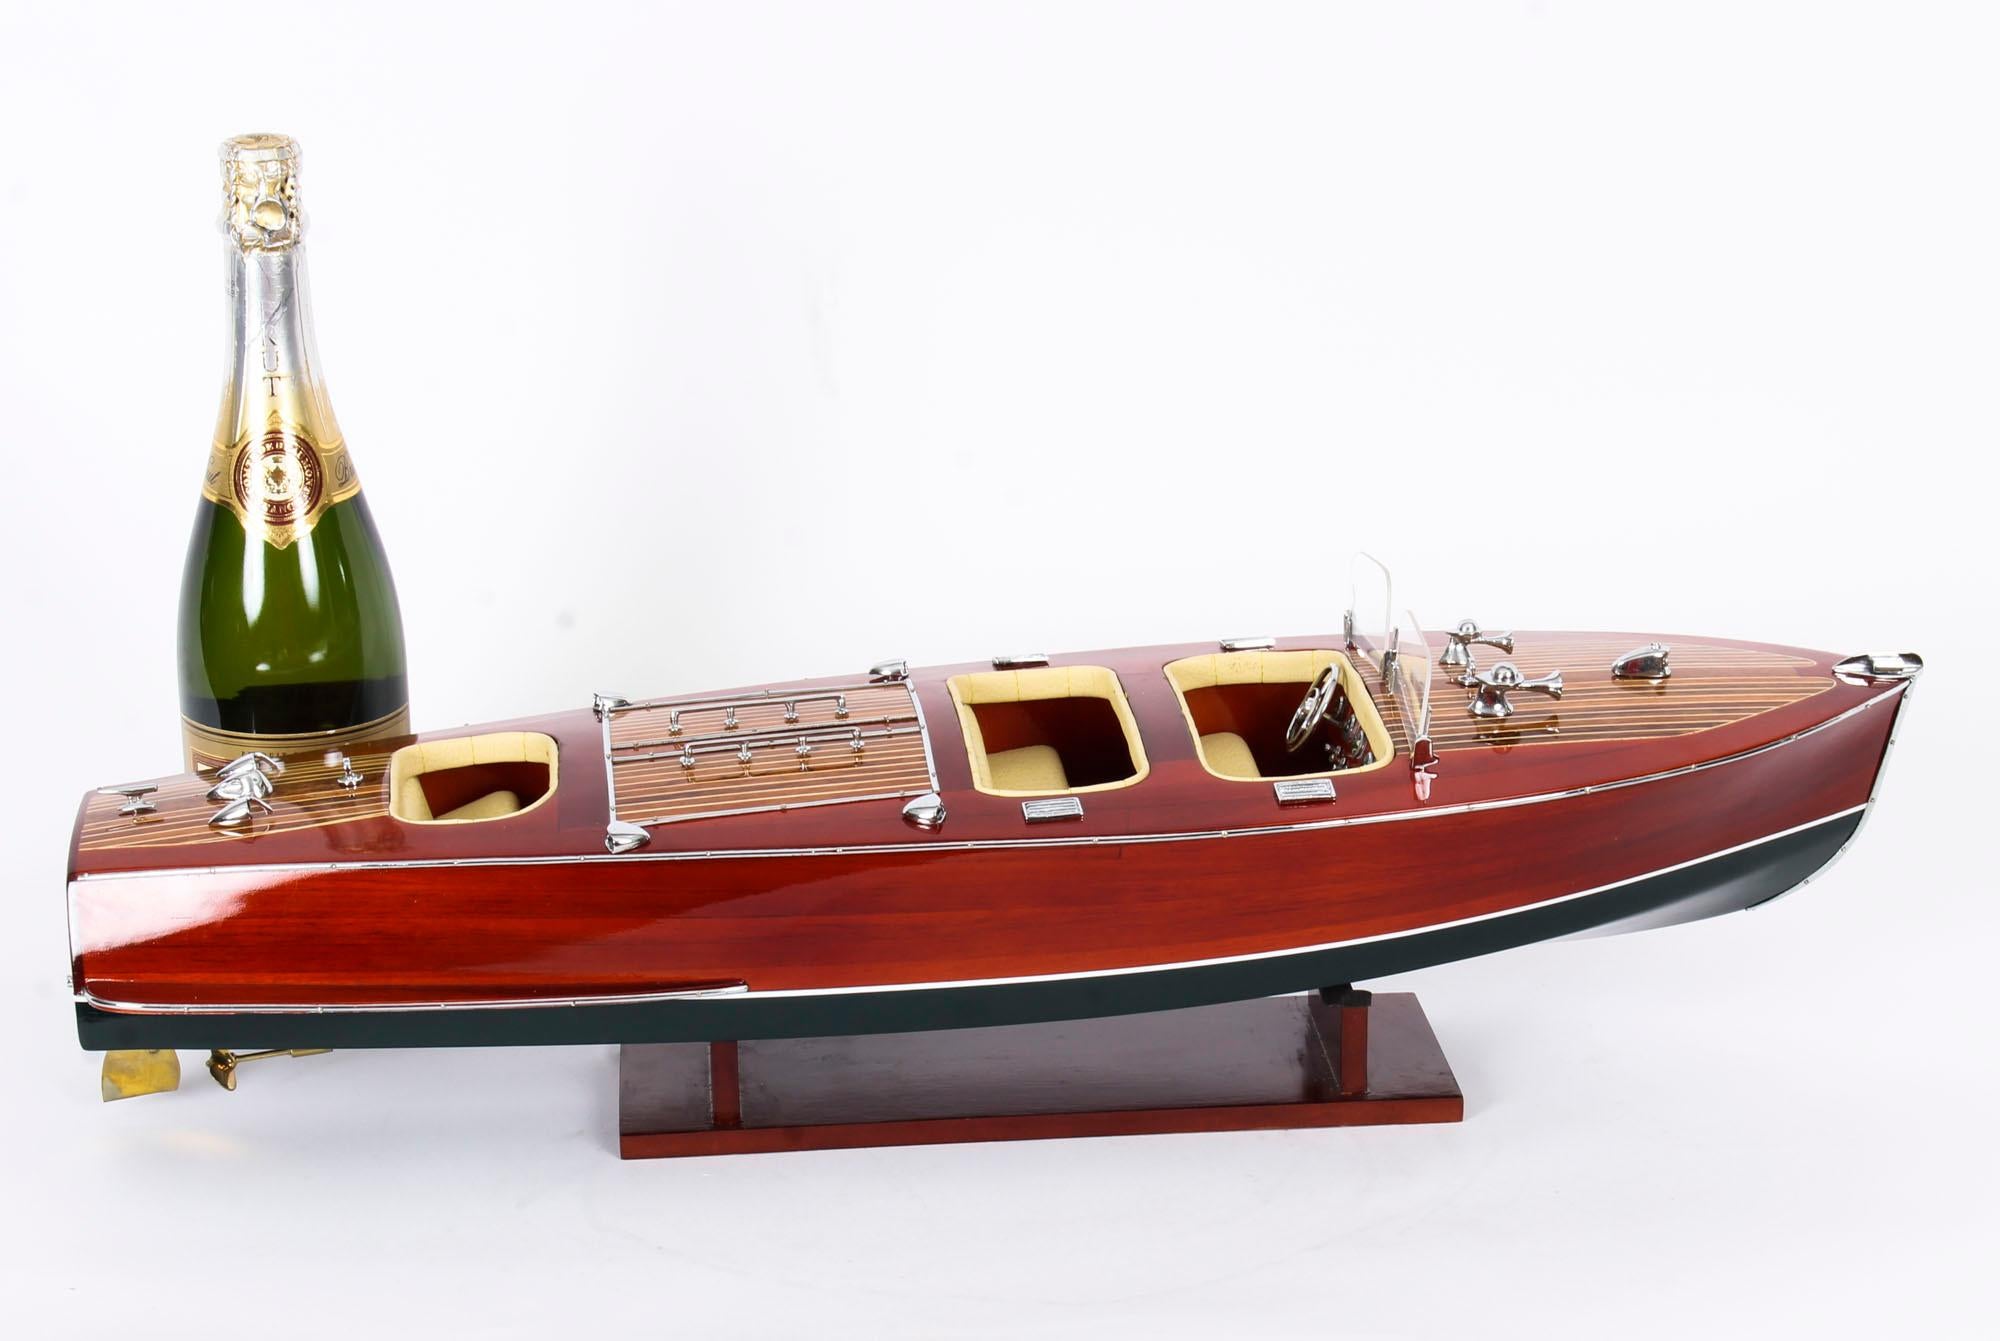 Vintage Model of a Riva Rivarama Speedboat with Cream Interior, 20th Century 1